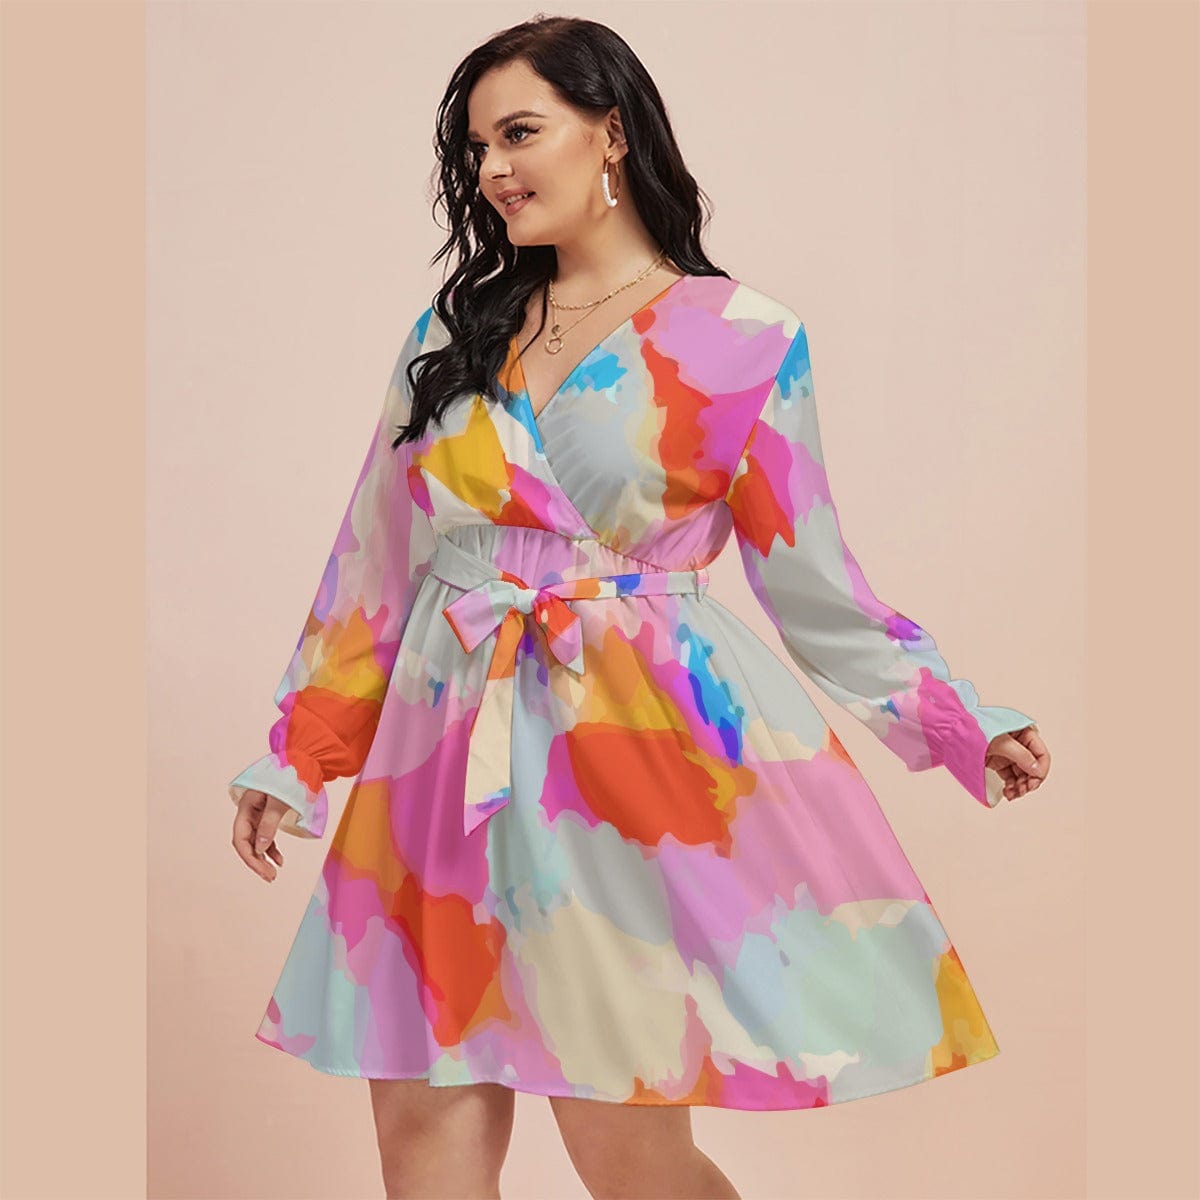 Yoycol Dresses Mod Colors Print Women's V-neck Dress With Waistband